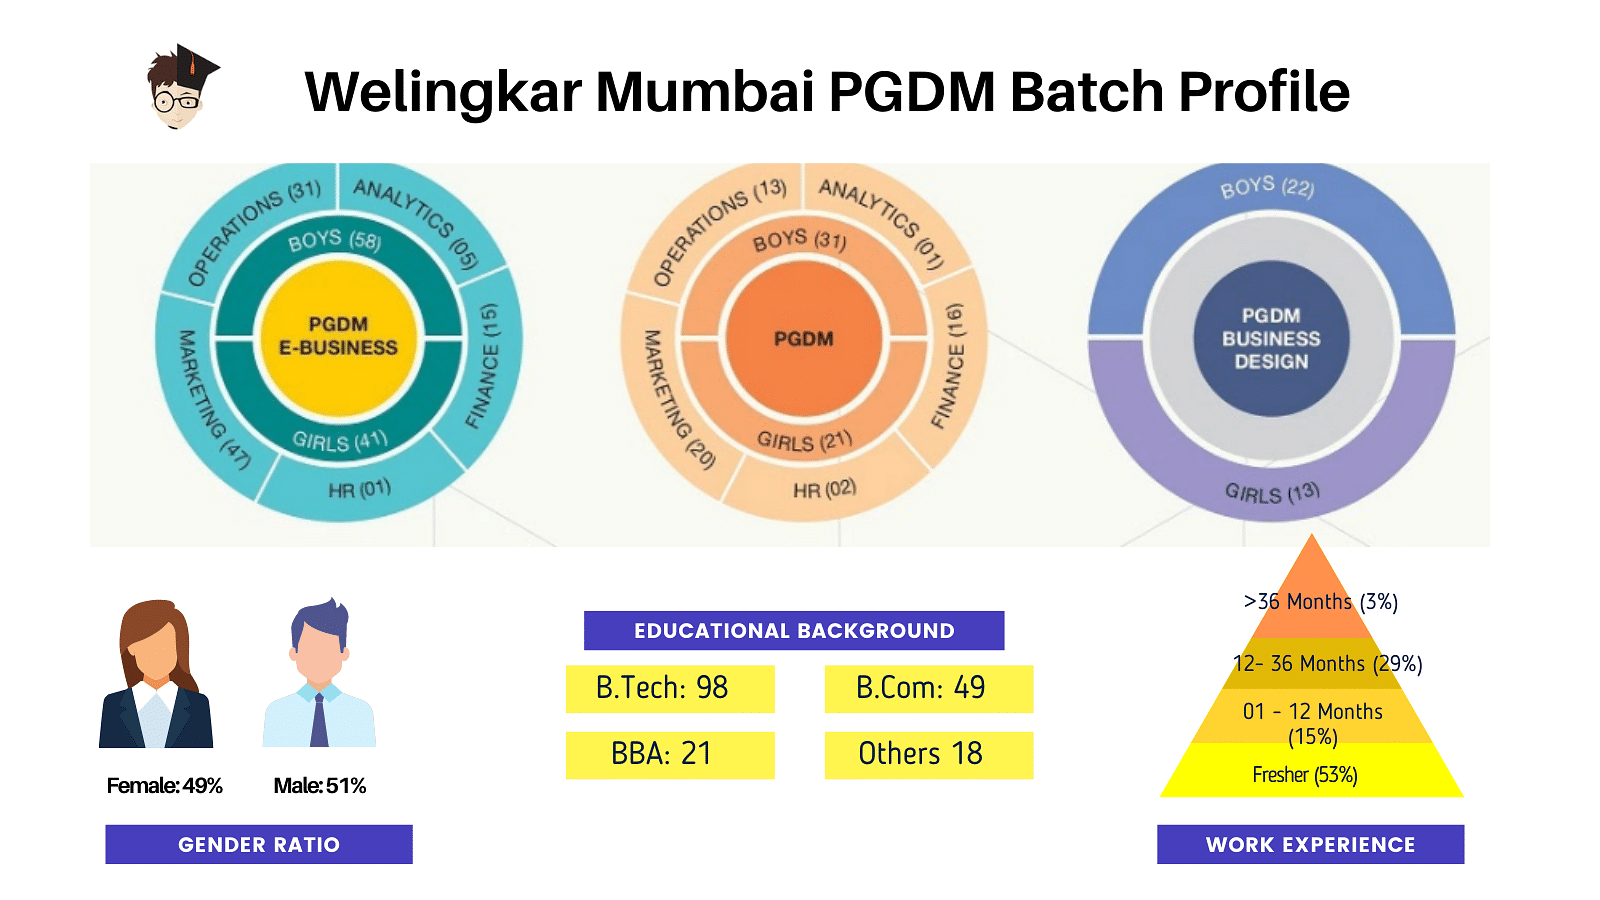 PGDM Batch Profile